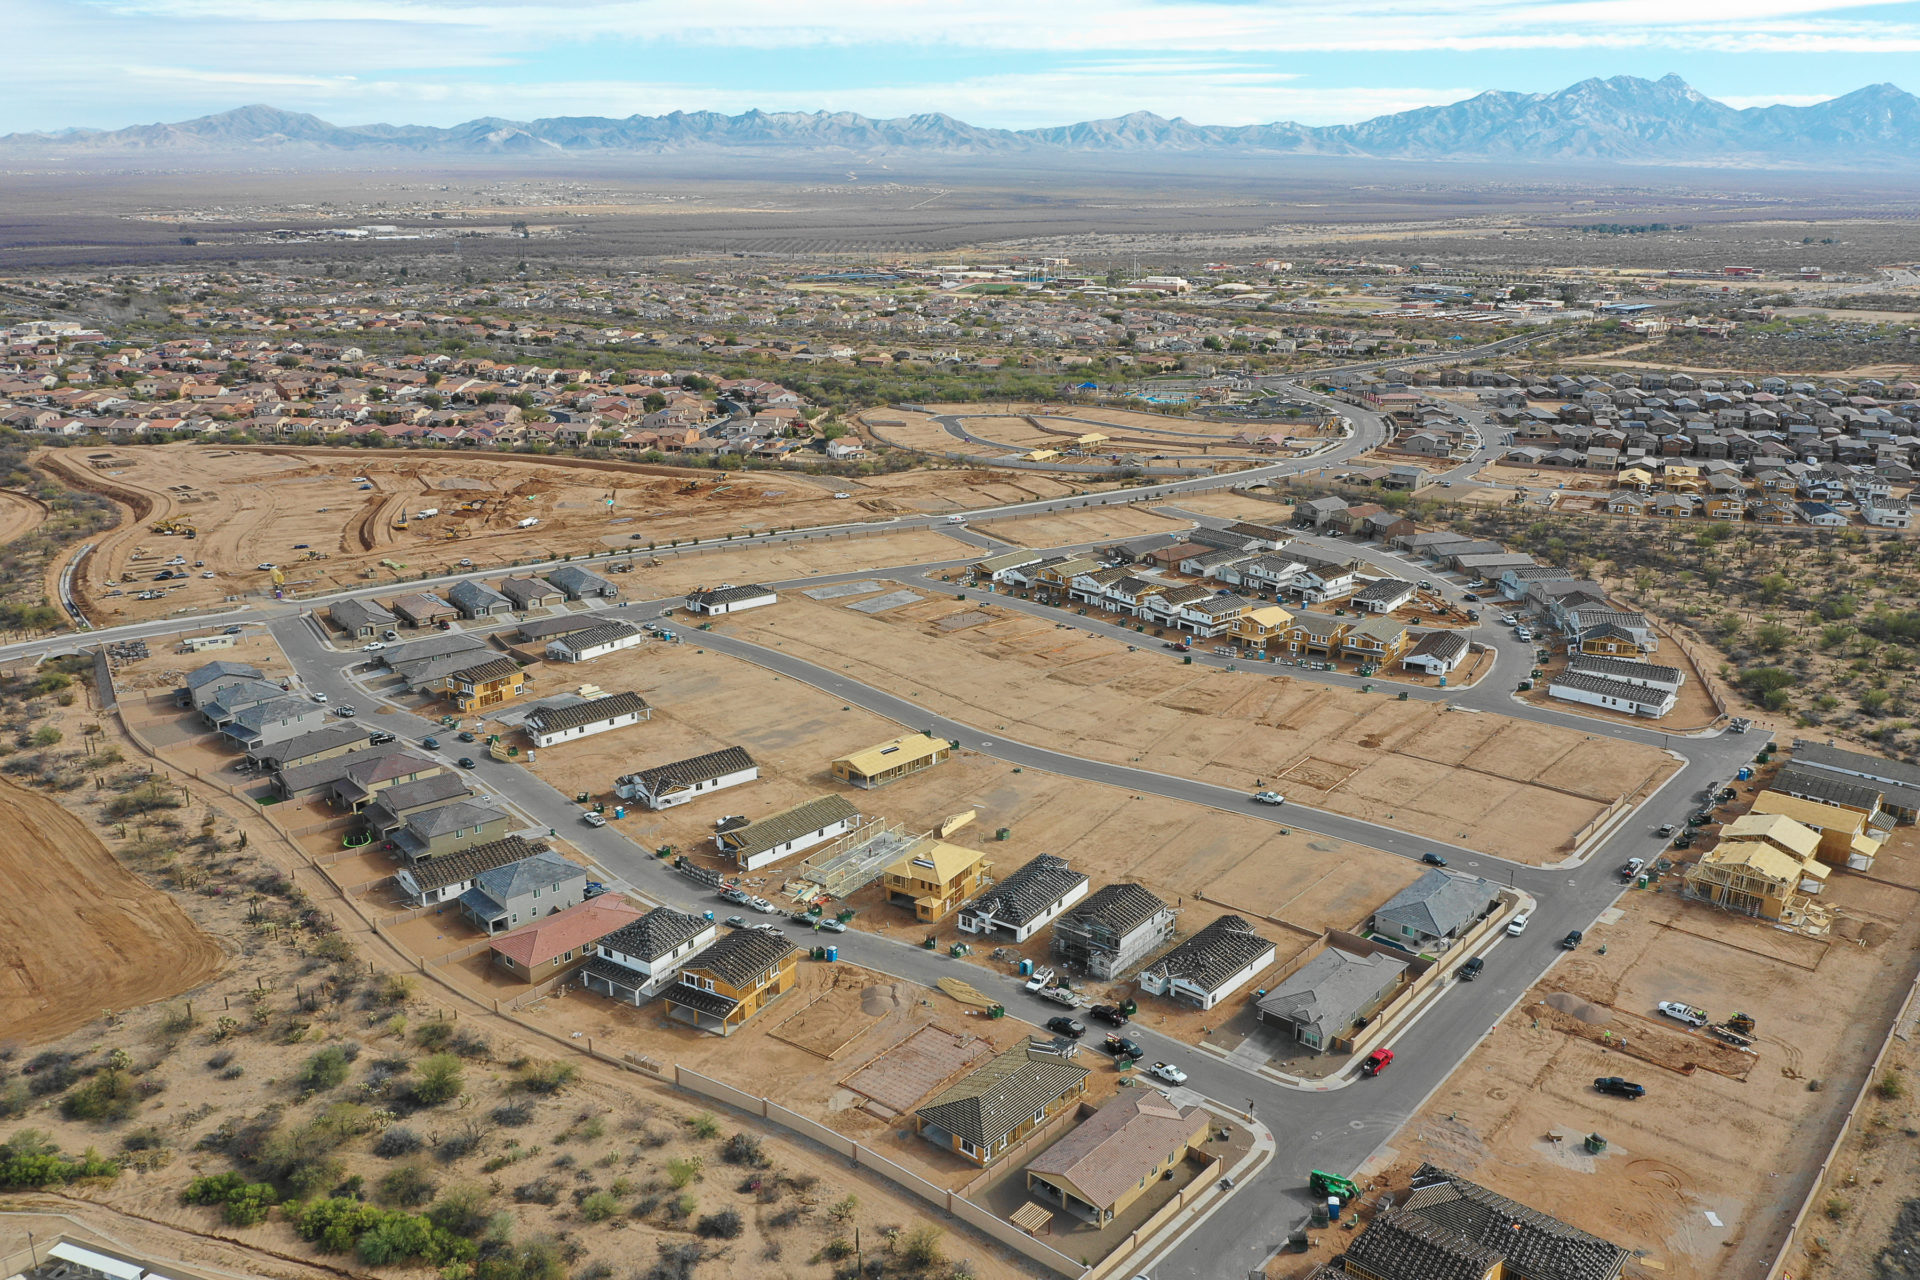 Source: Sahuarita Sun: "Rancho Sahuarita sees huge demand for new homes" - Aerial photography